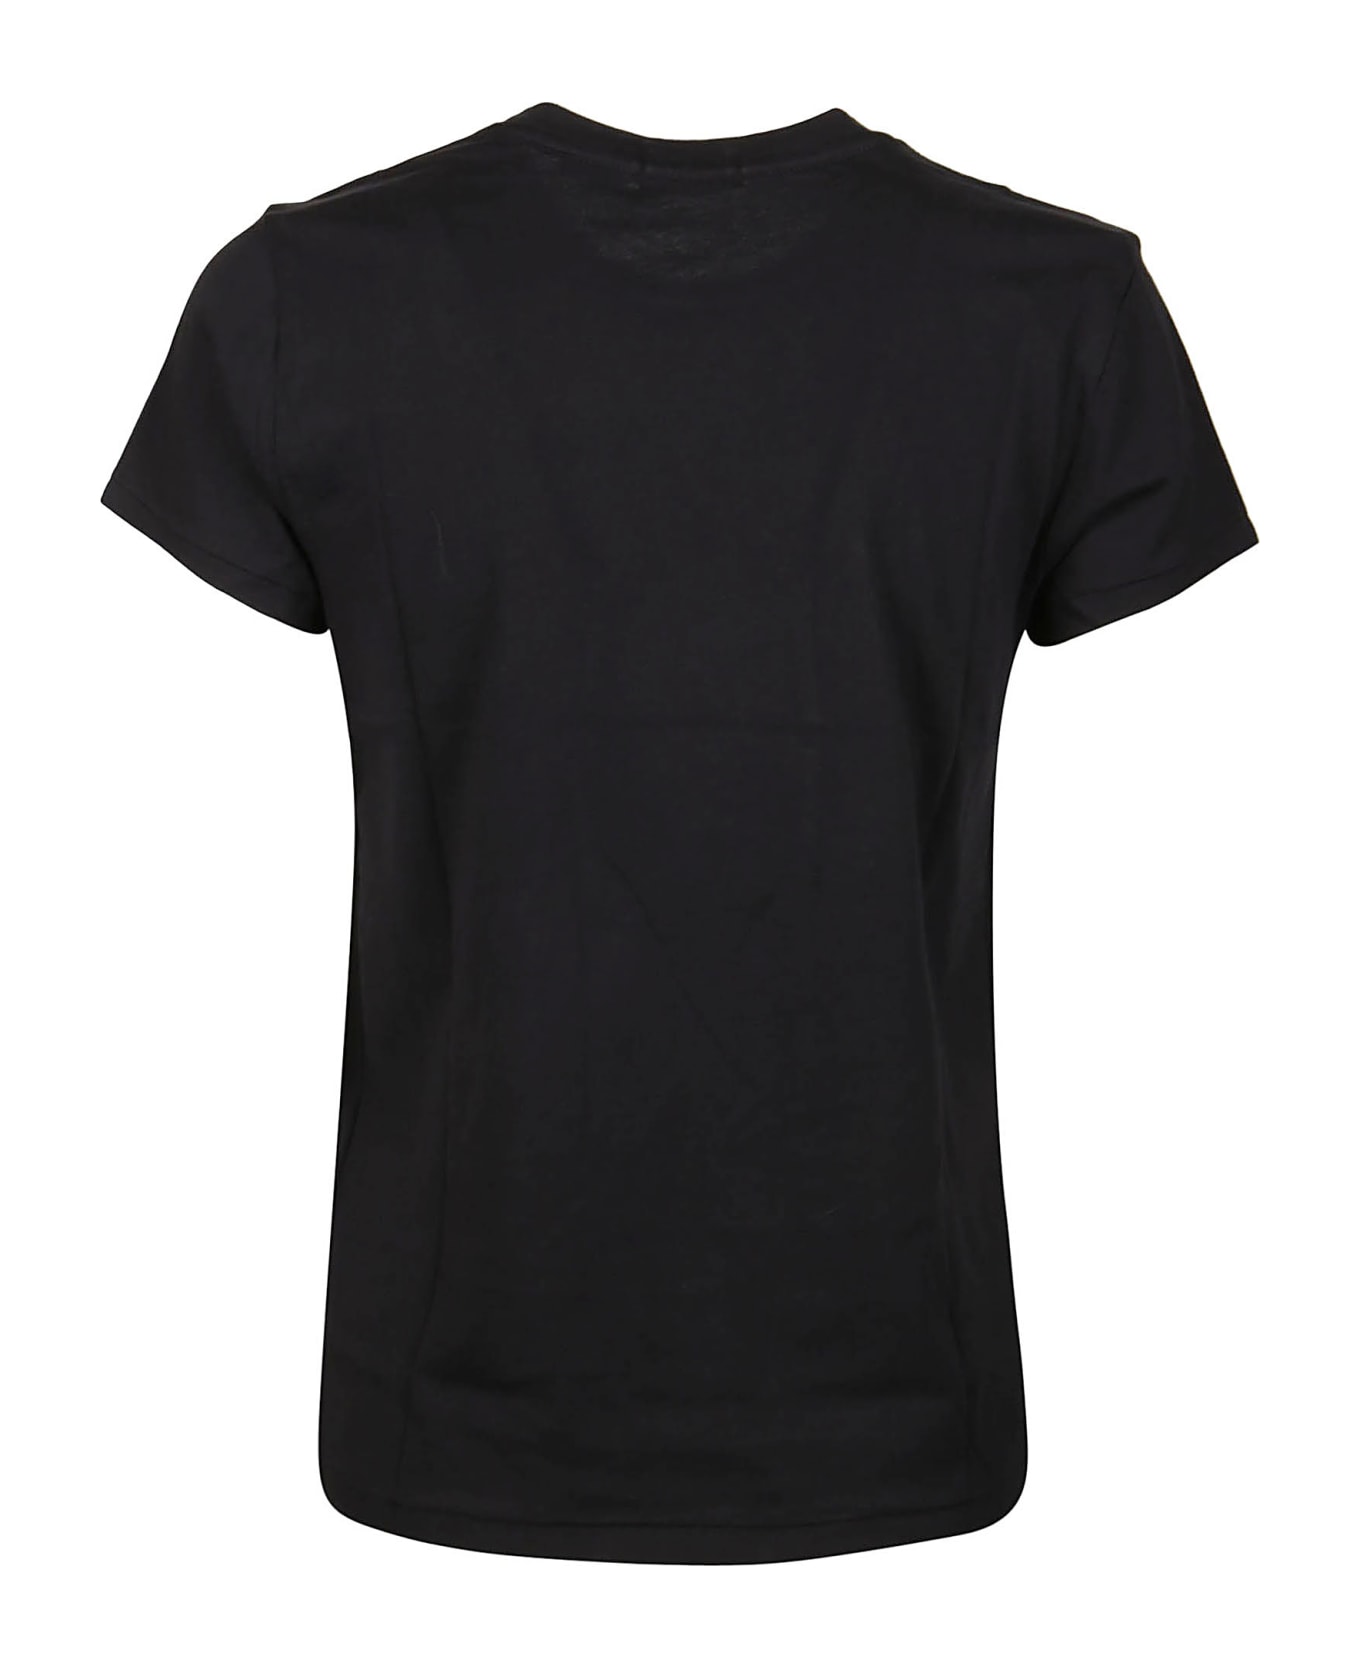 Polo Ralph Lauren New T-shirt - Polo Black